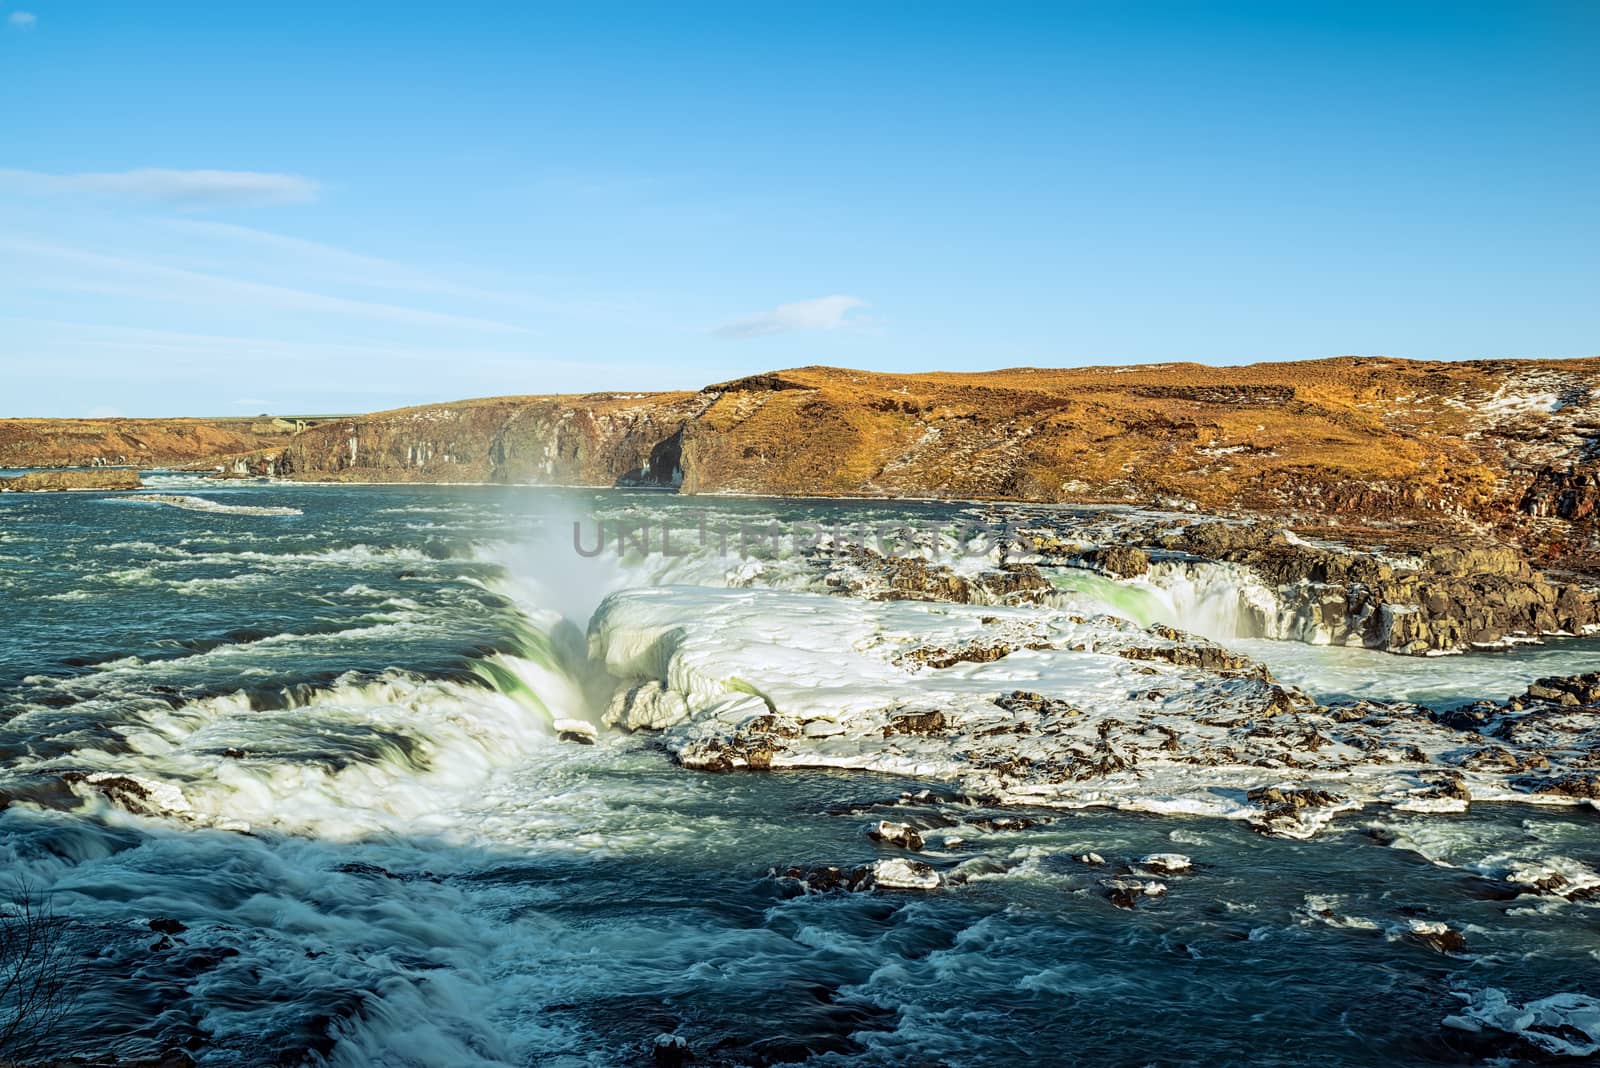 Urridafoss waterfall, Iceland by LuigiMorbidelli